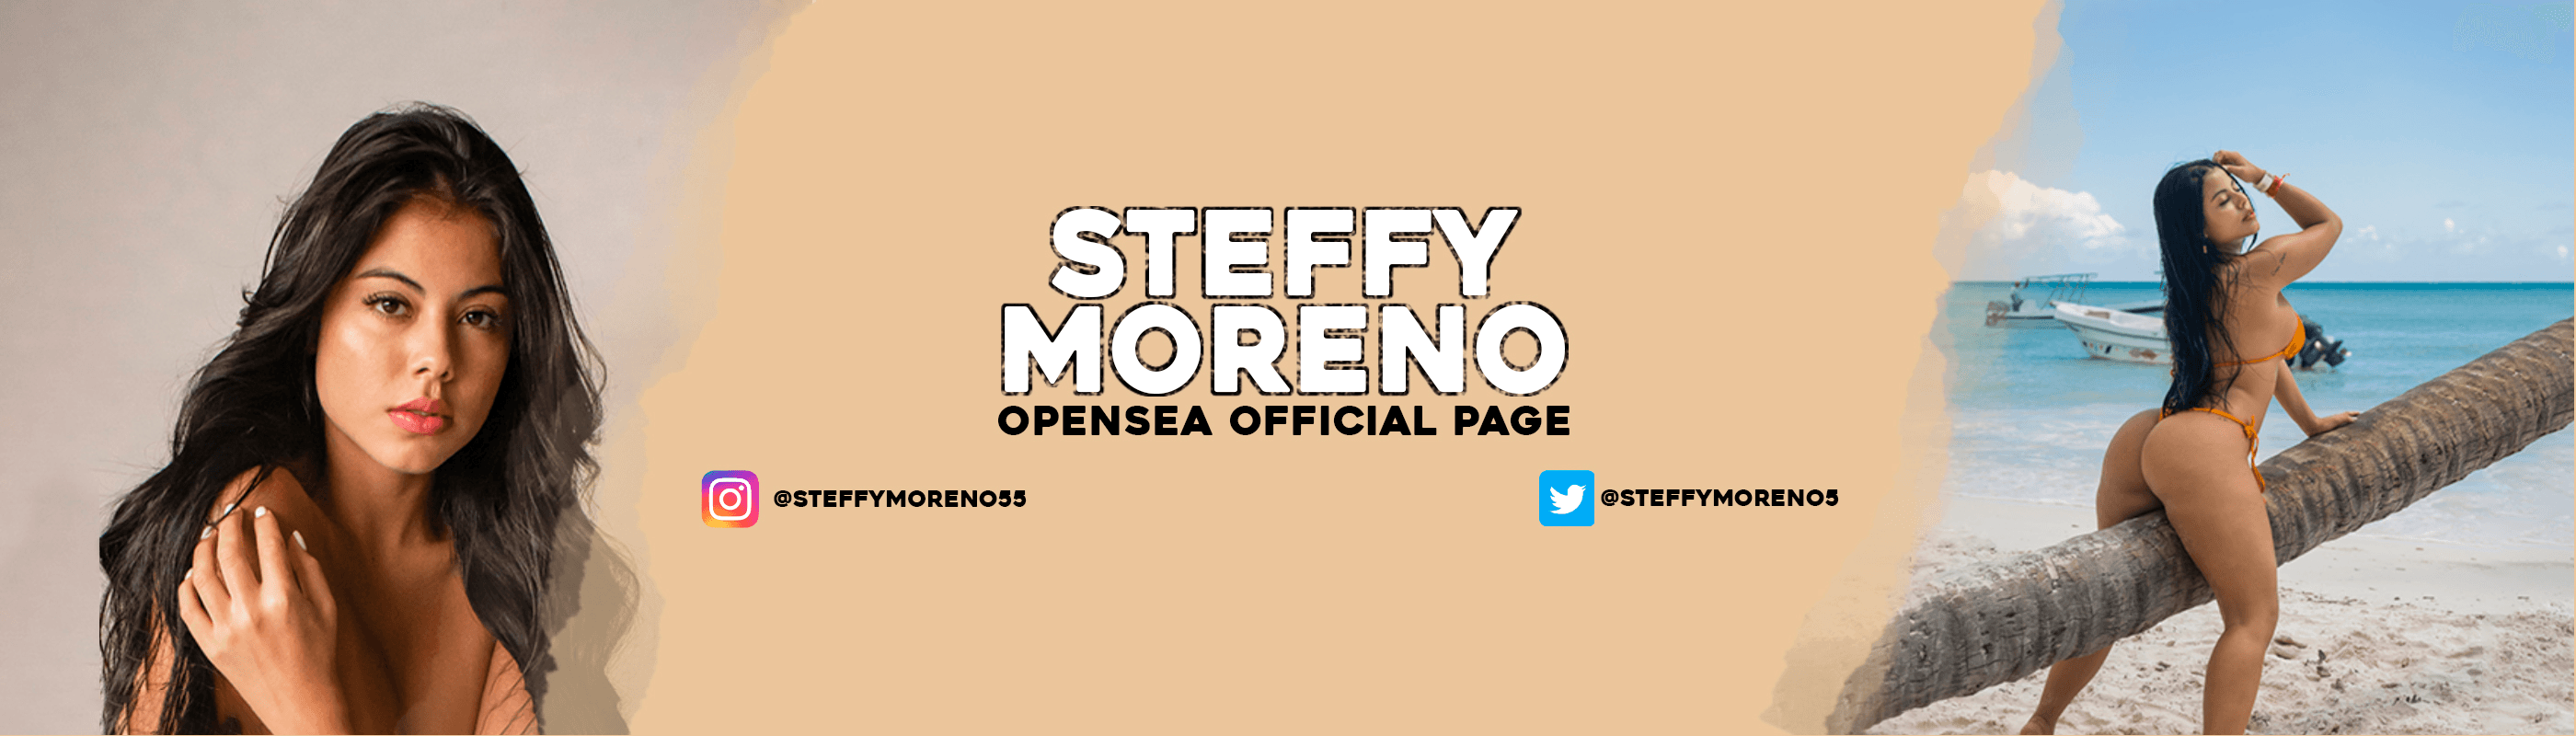 SteffyMoreno banner